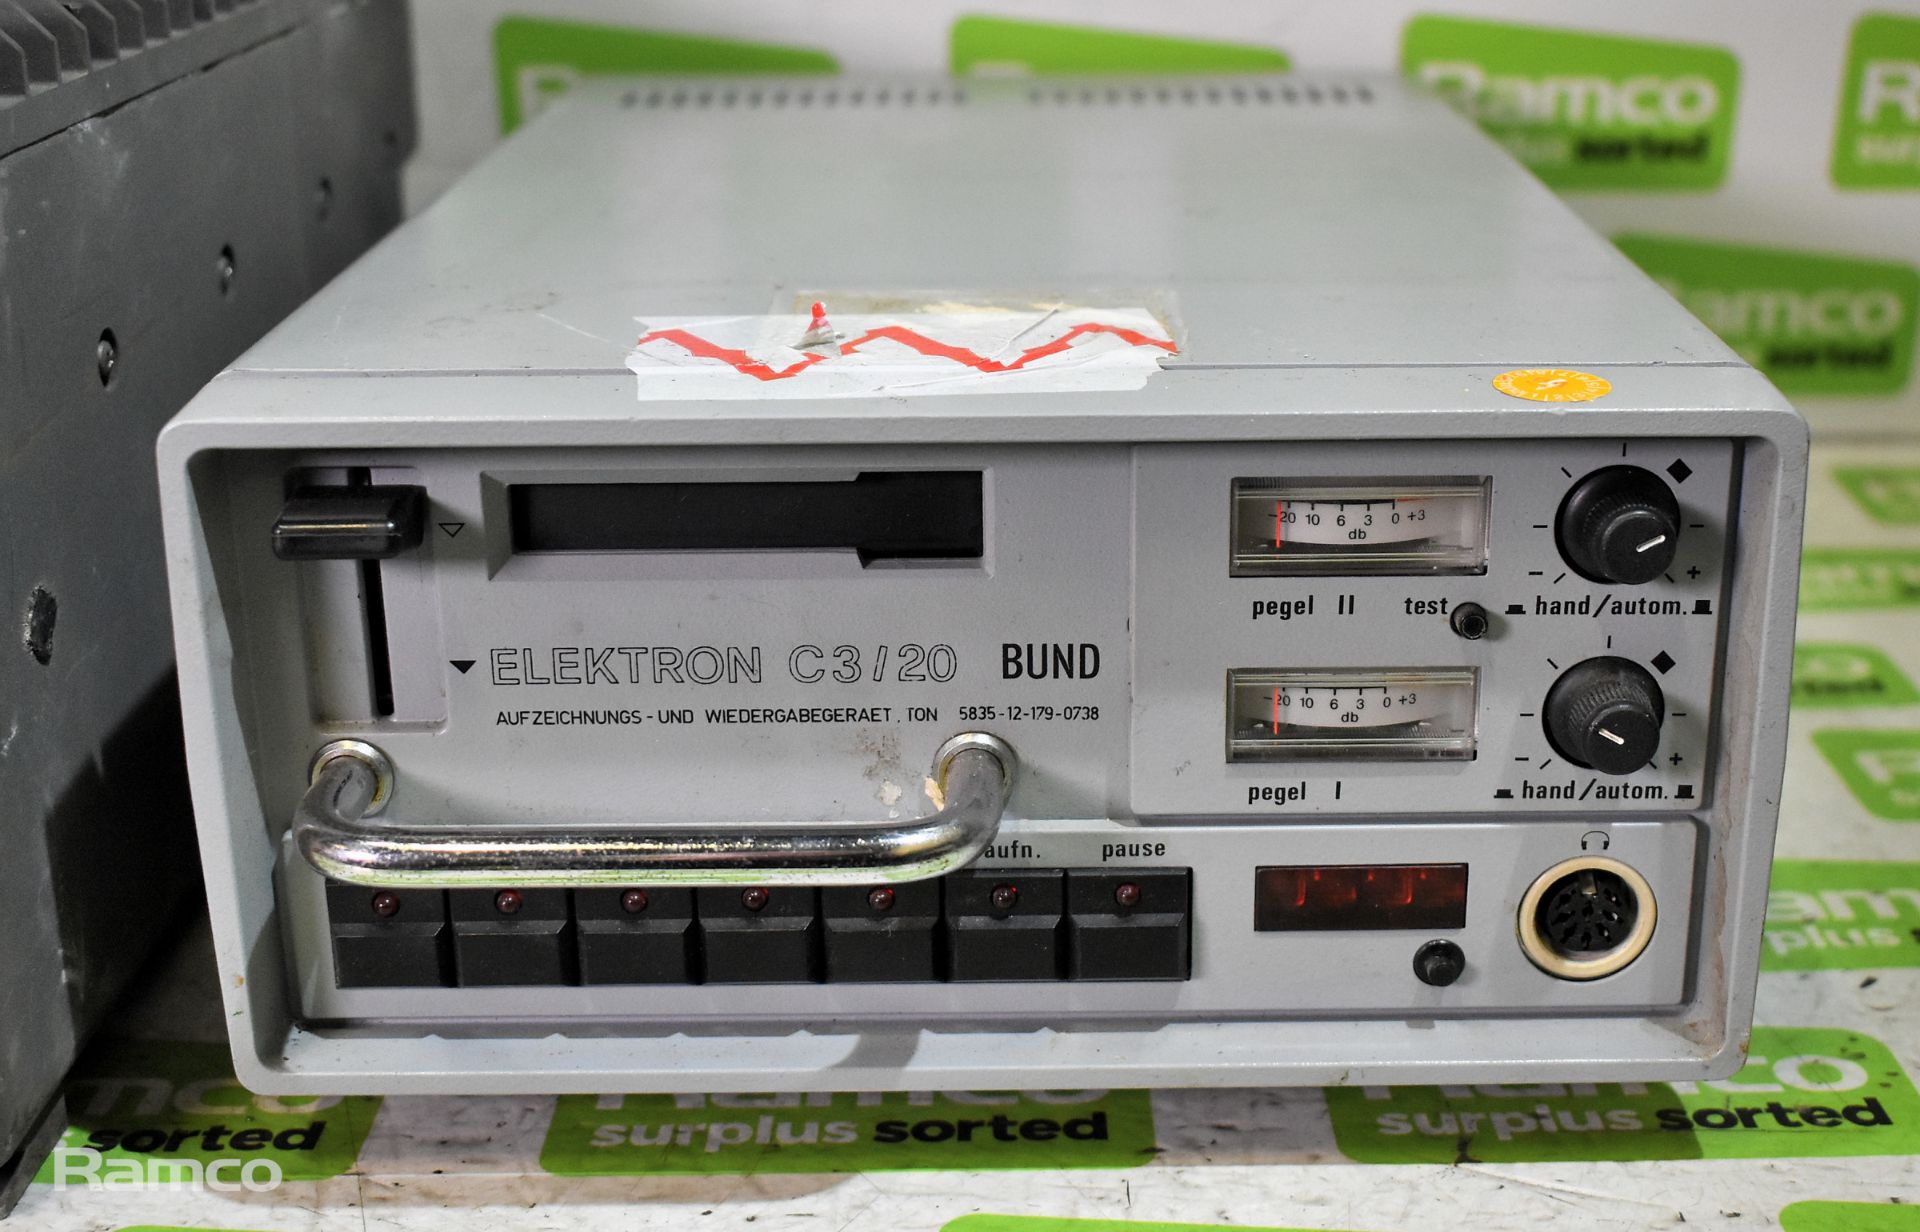 Racal military radio vehicle interface and Elektron C3/20 - Image 4 of 5